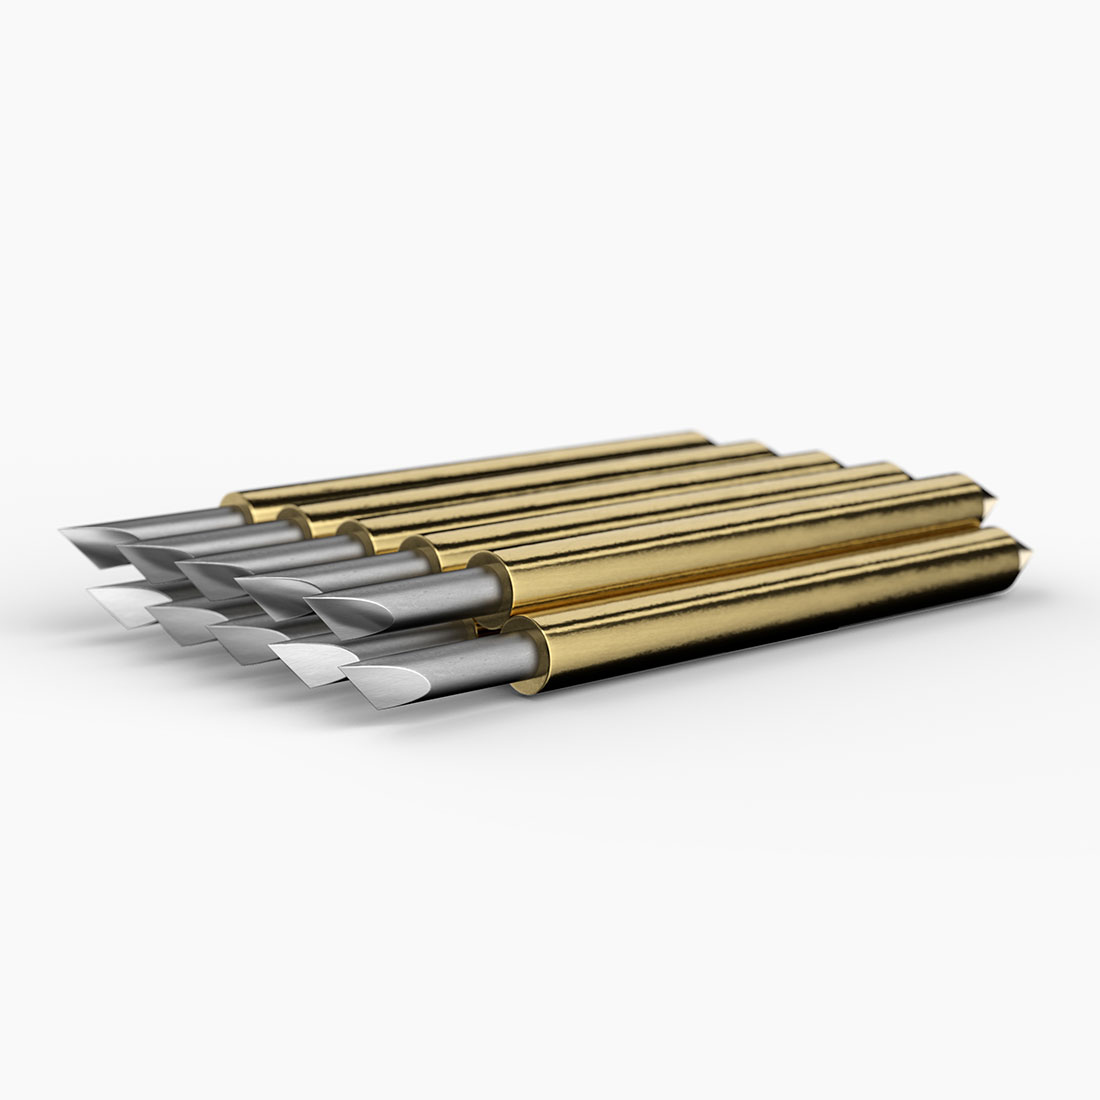 10Pcs High Precision Replacement Blade For Cricut Joy Cutting Blades Vinyl  Plotter Blades For Cricut Joy